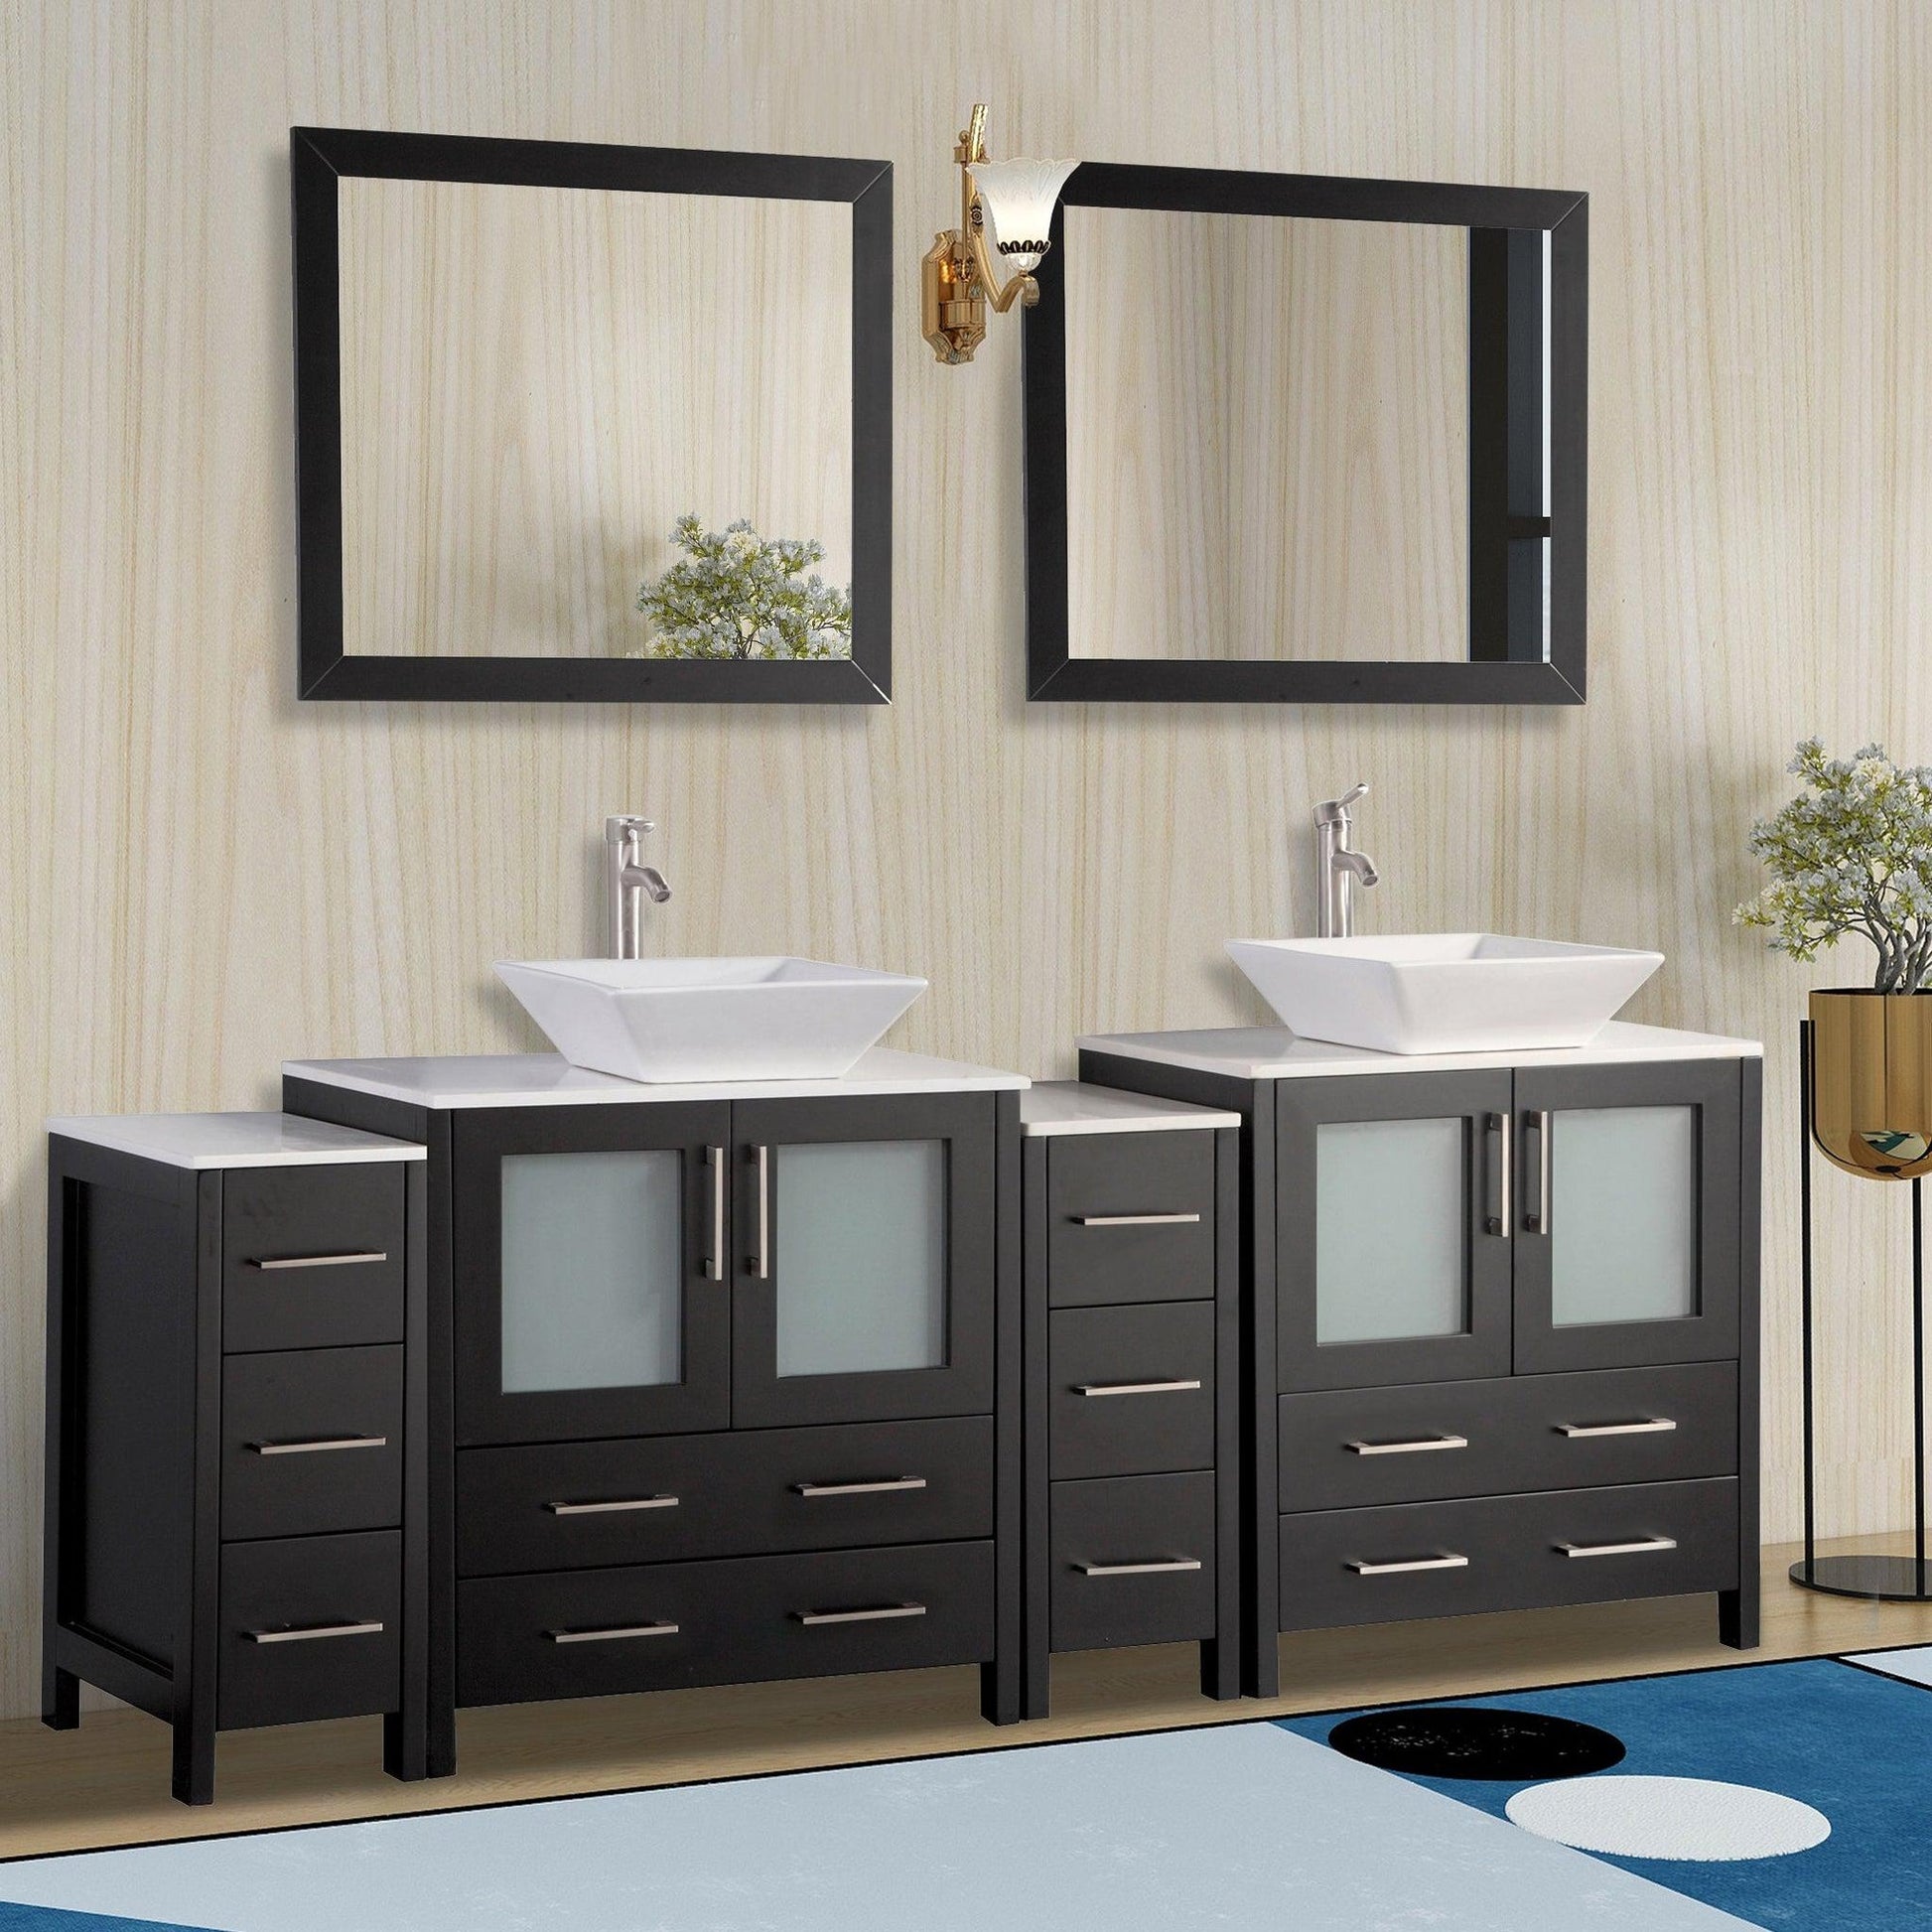 Polished Chrome Wall Mounted Double Glass Shower Shelf - Luxury Bath  Collection